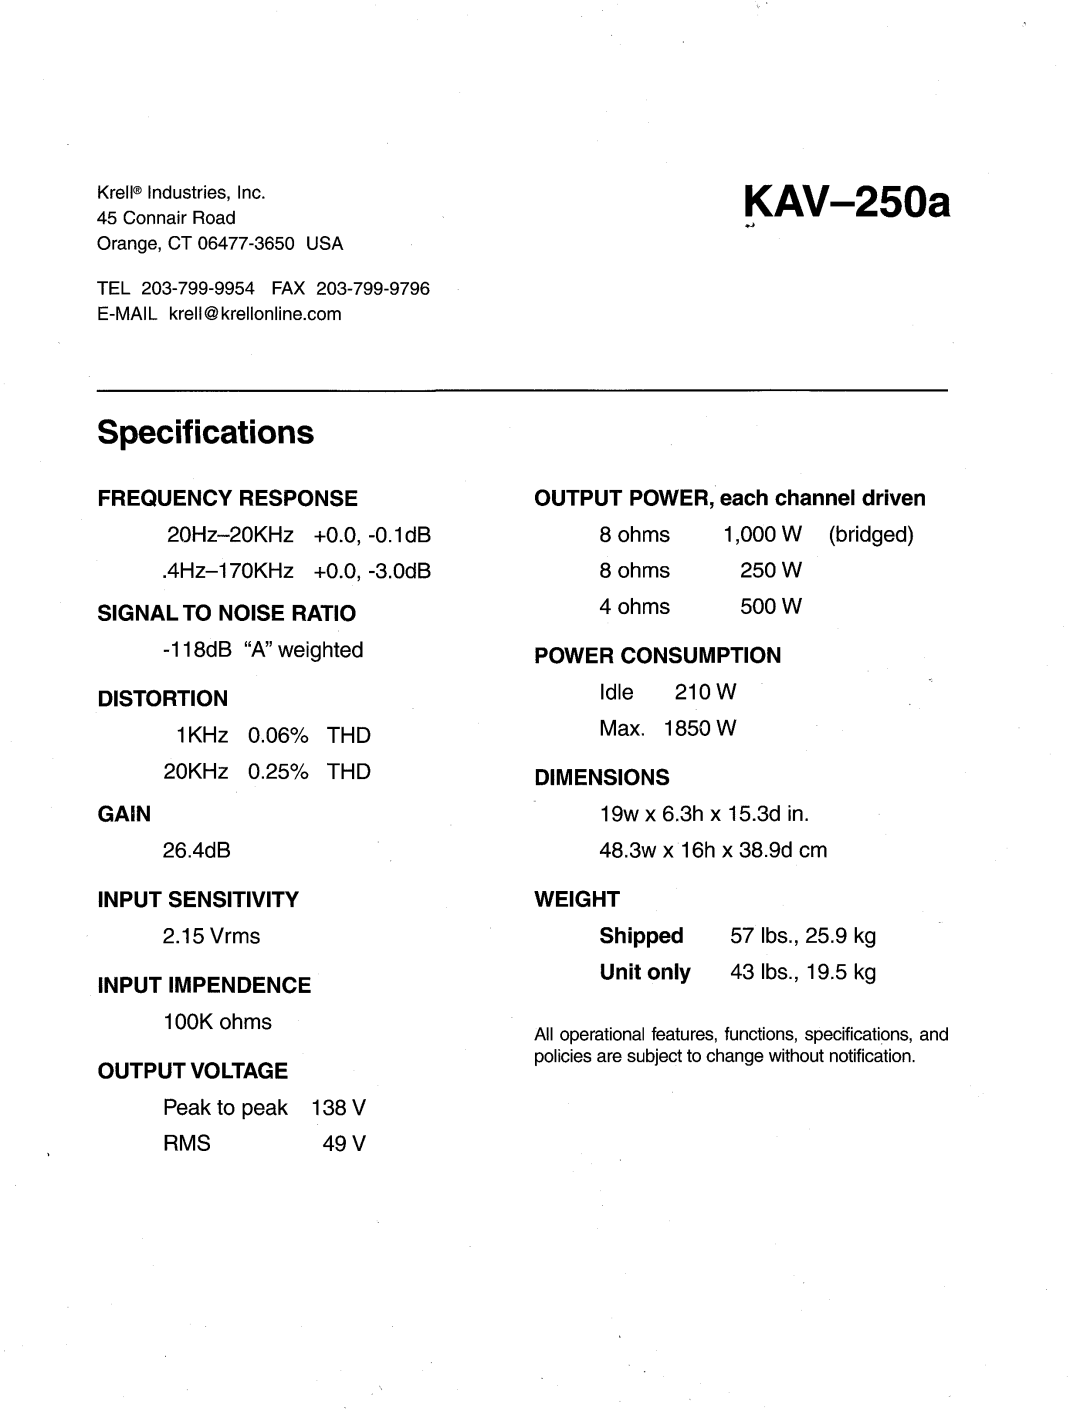 Krell Industries KAV-250a manual Specifications, Frequencyresponse, Signalto Noiseratio, Distortion, Gain, Inputsensitivity 